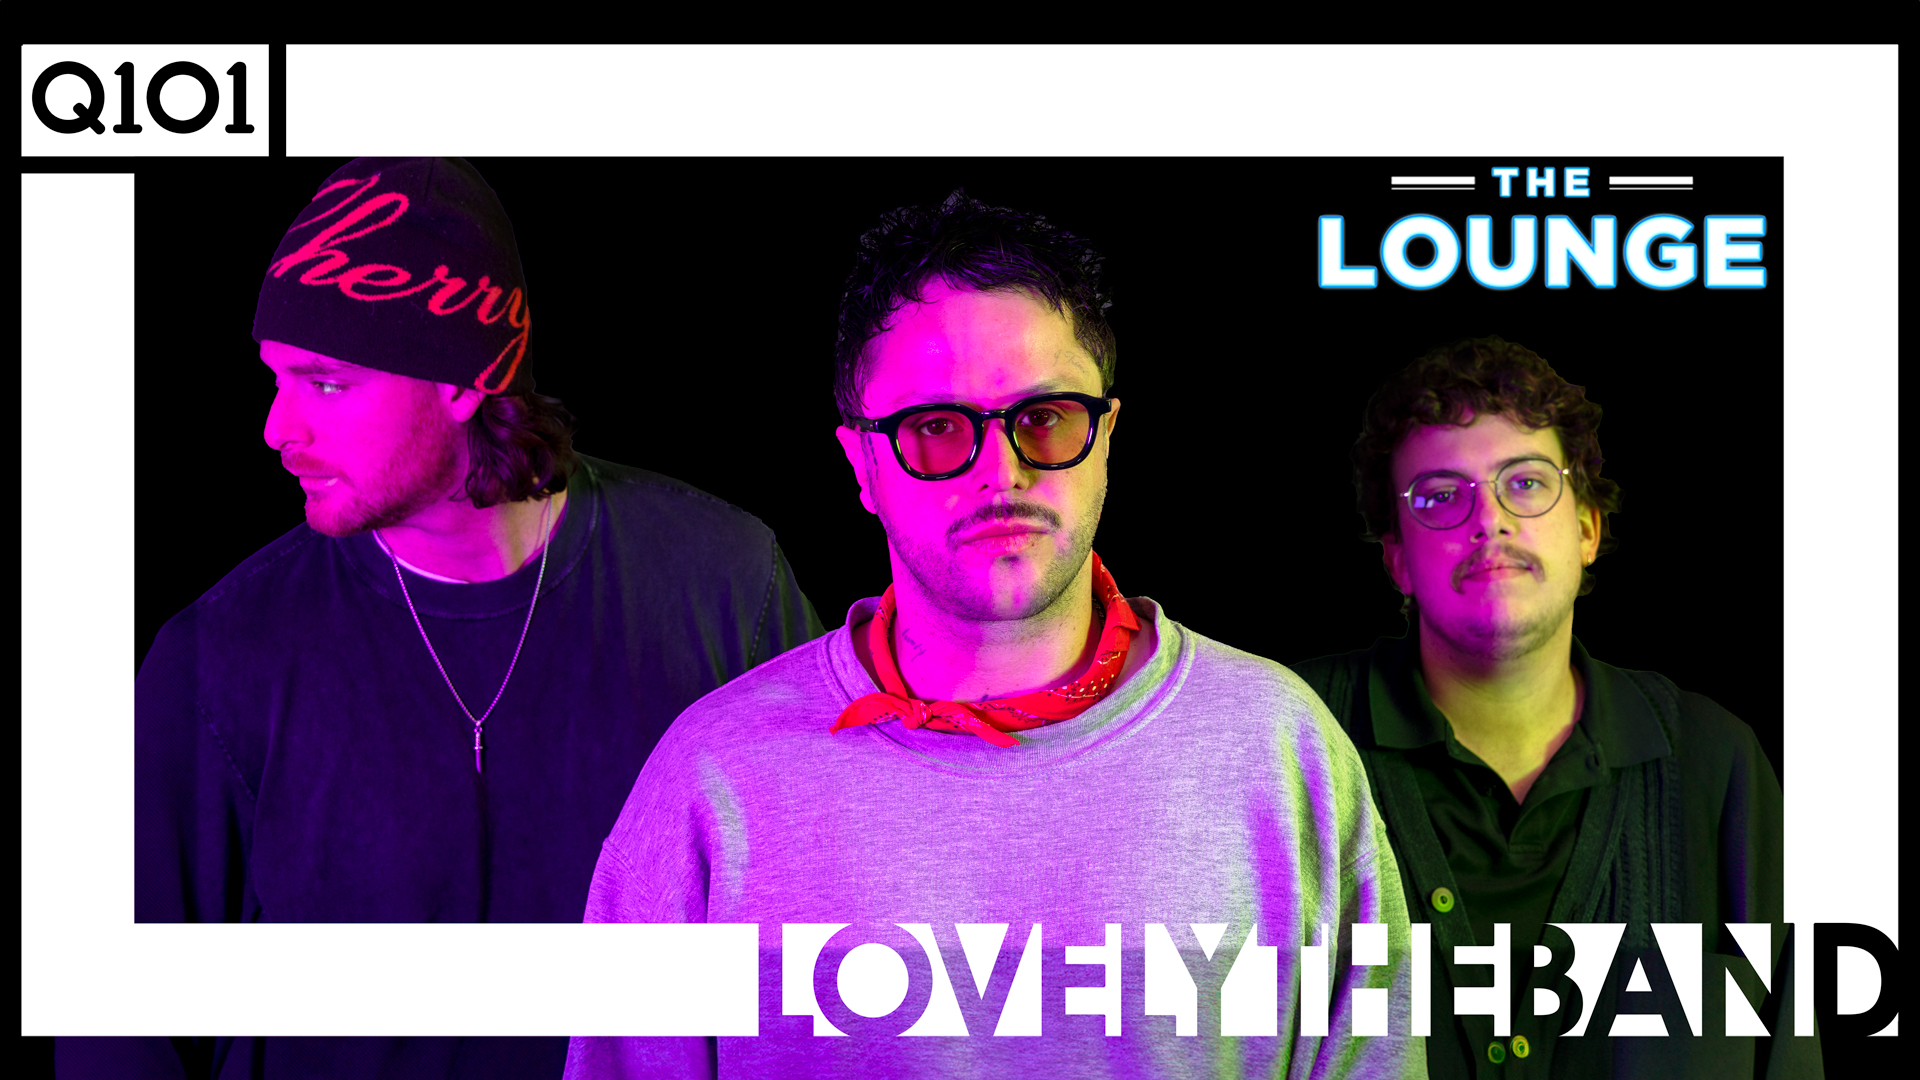 lovelytheband — The Lounge